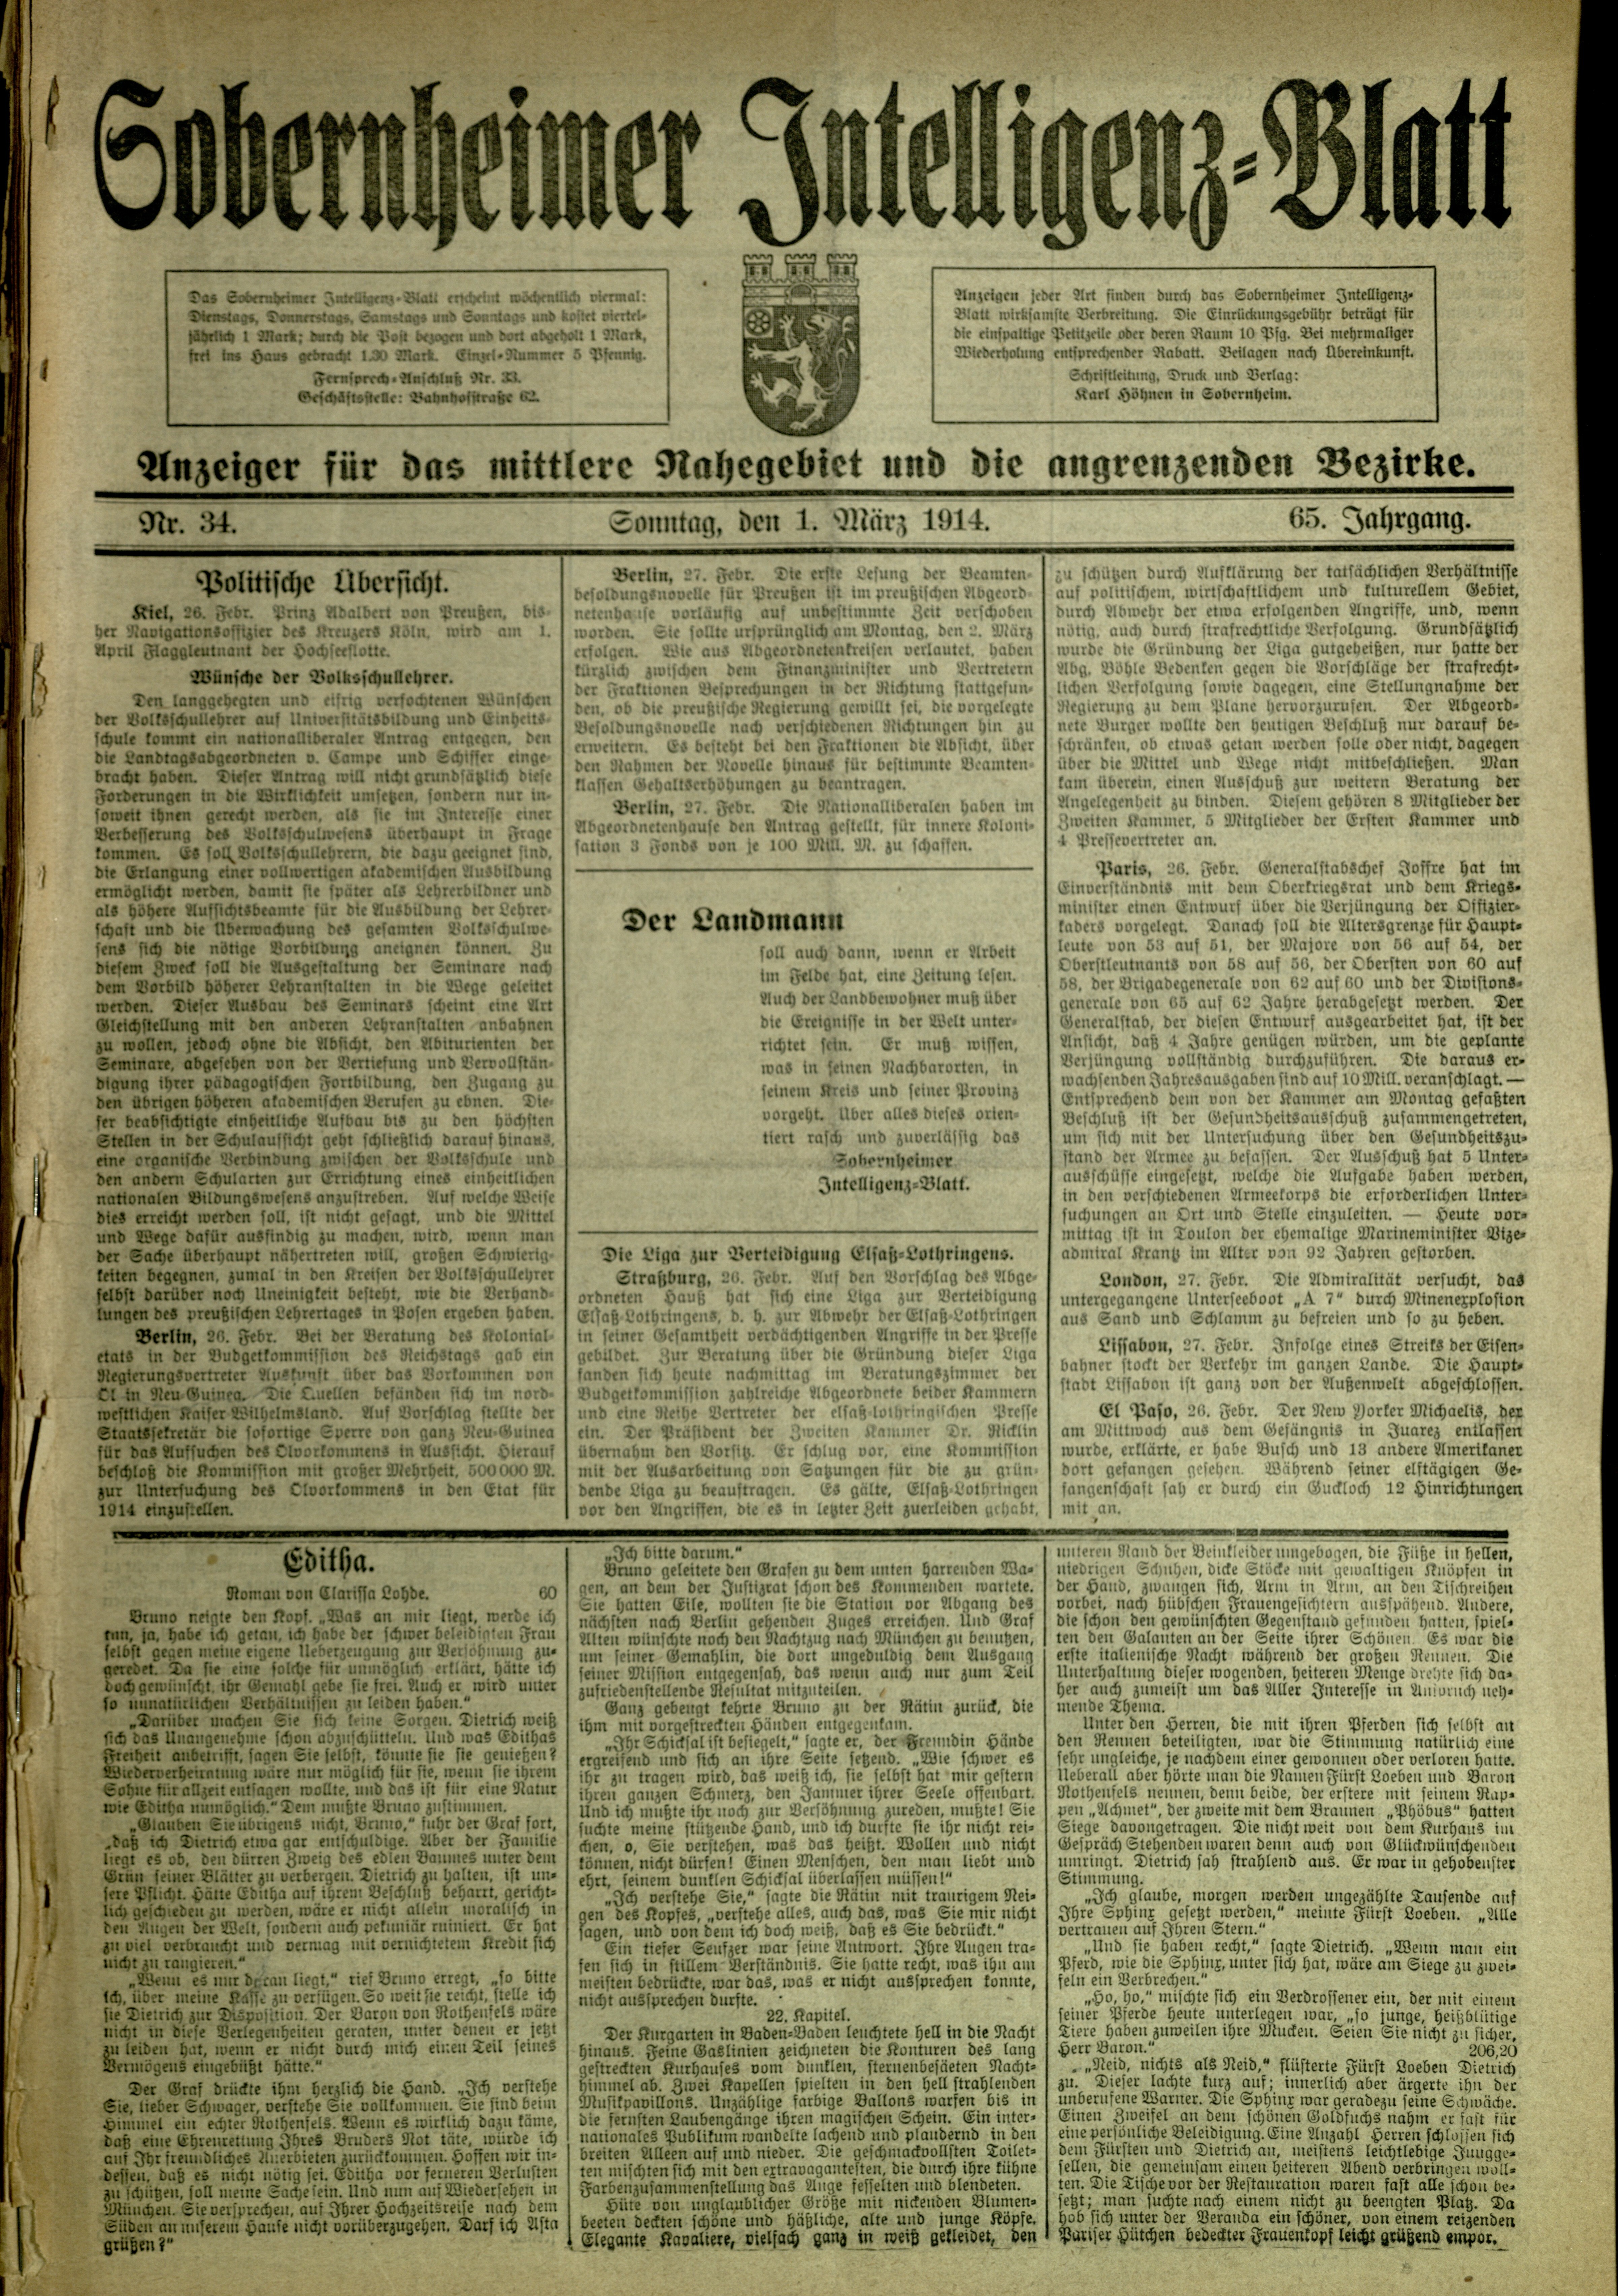 Zeitung: Sobernheimer Intelligenzblatt; März 1914, Jg. 65 Nr. 34 (Heimatmuseum Bad Sobernheim CC BY-NC-SA)